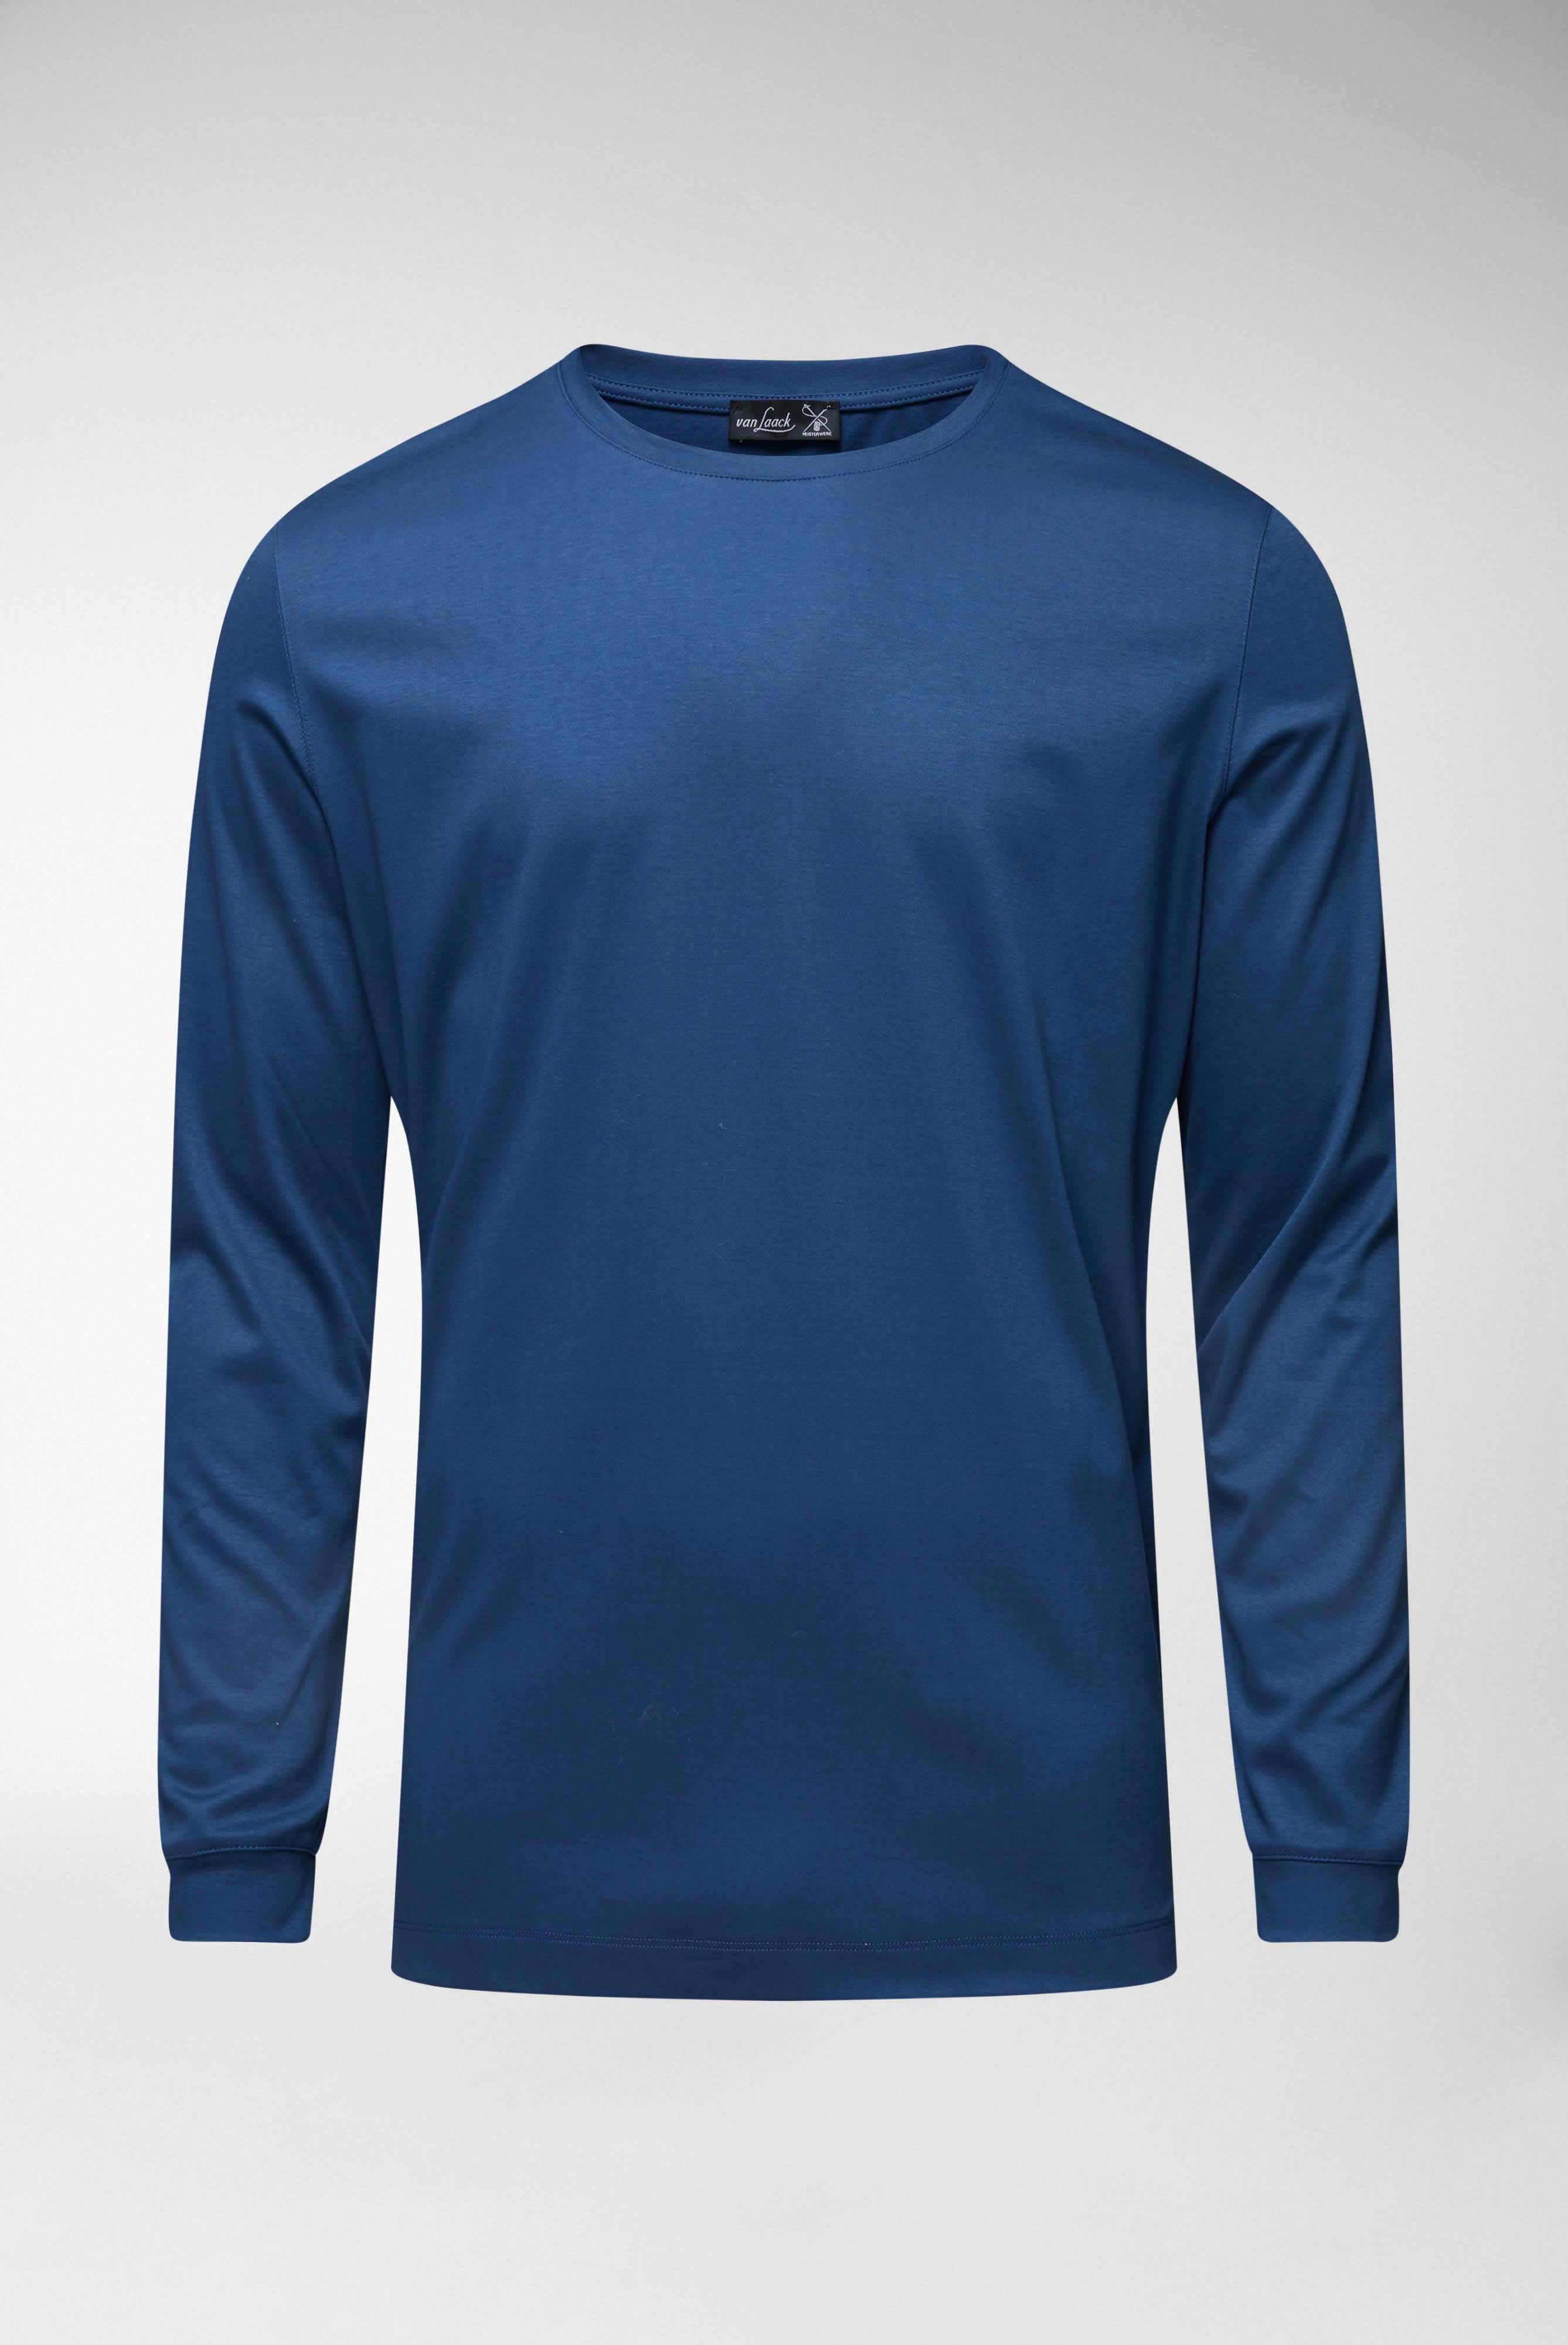 T-Shirts+Long Sleeve T-shirt Swiss Cotton+20.1718.UX.180031.780.XL